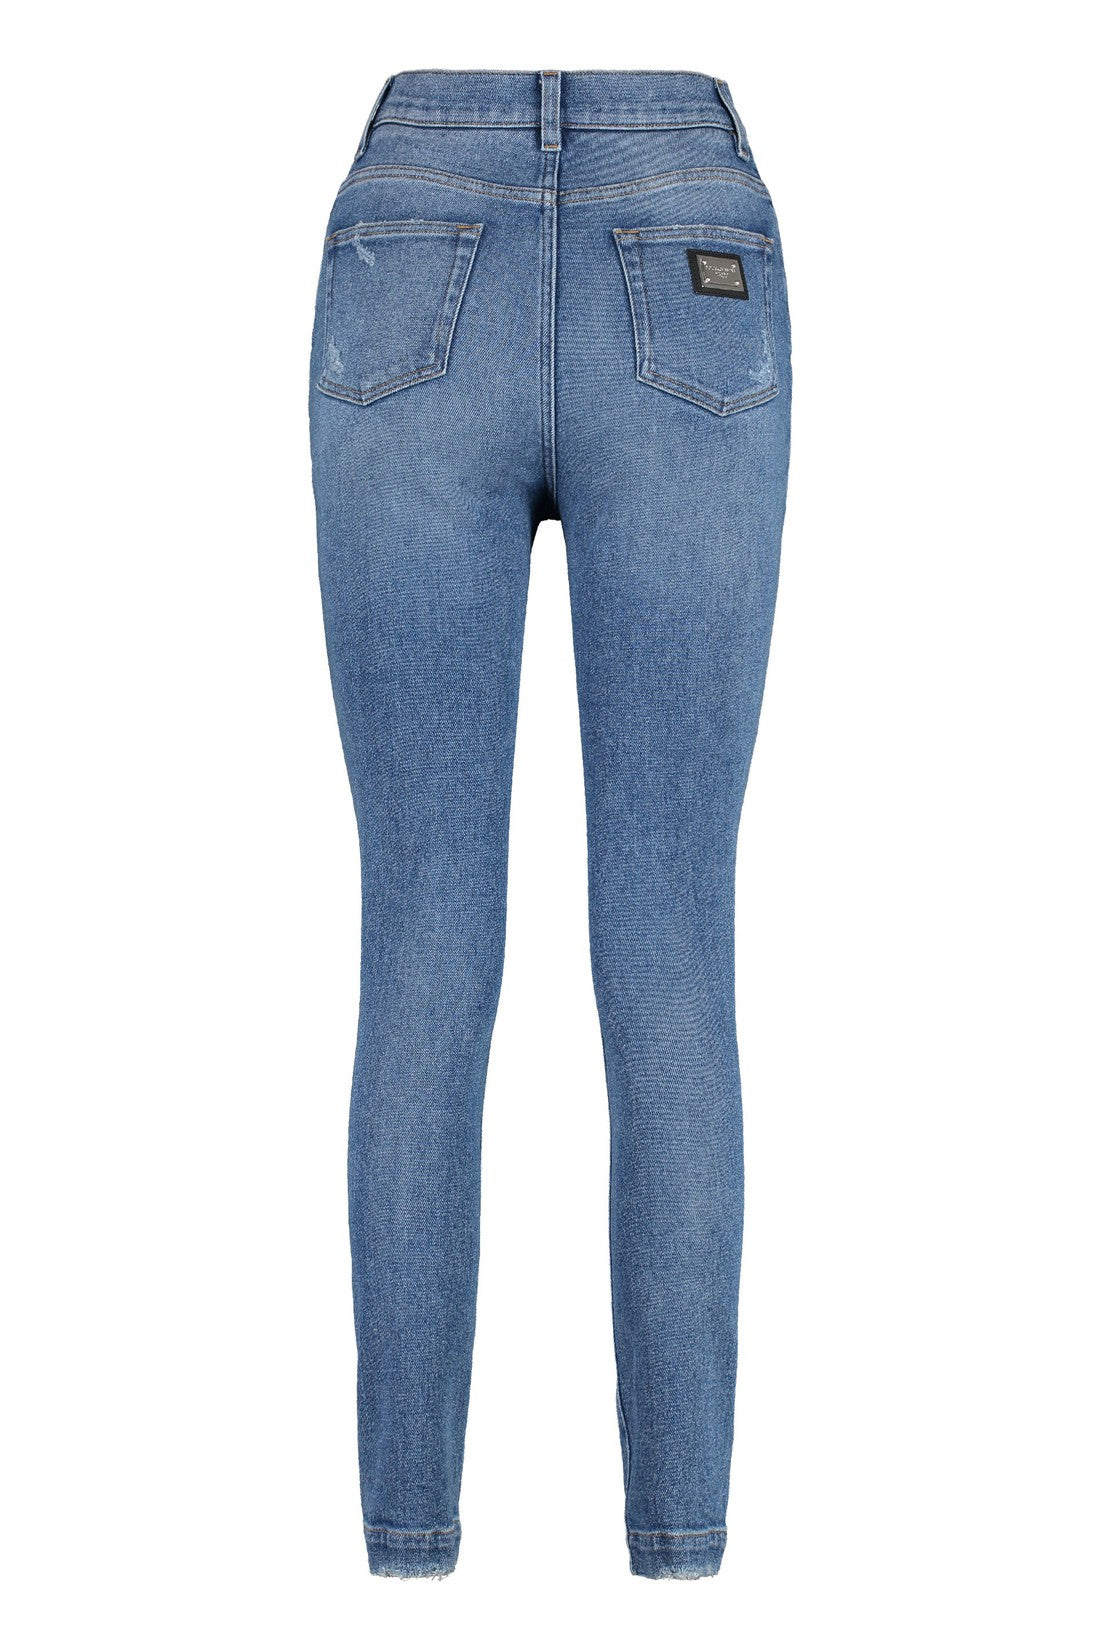 Dolce & Gabbana-OUTLET-SALE-Grace high-rise skinny-fit jeans-ARCHIVIST